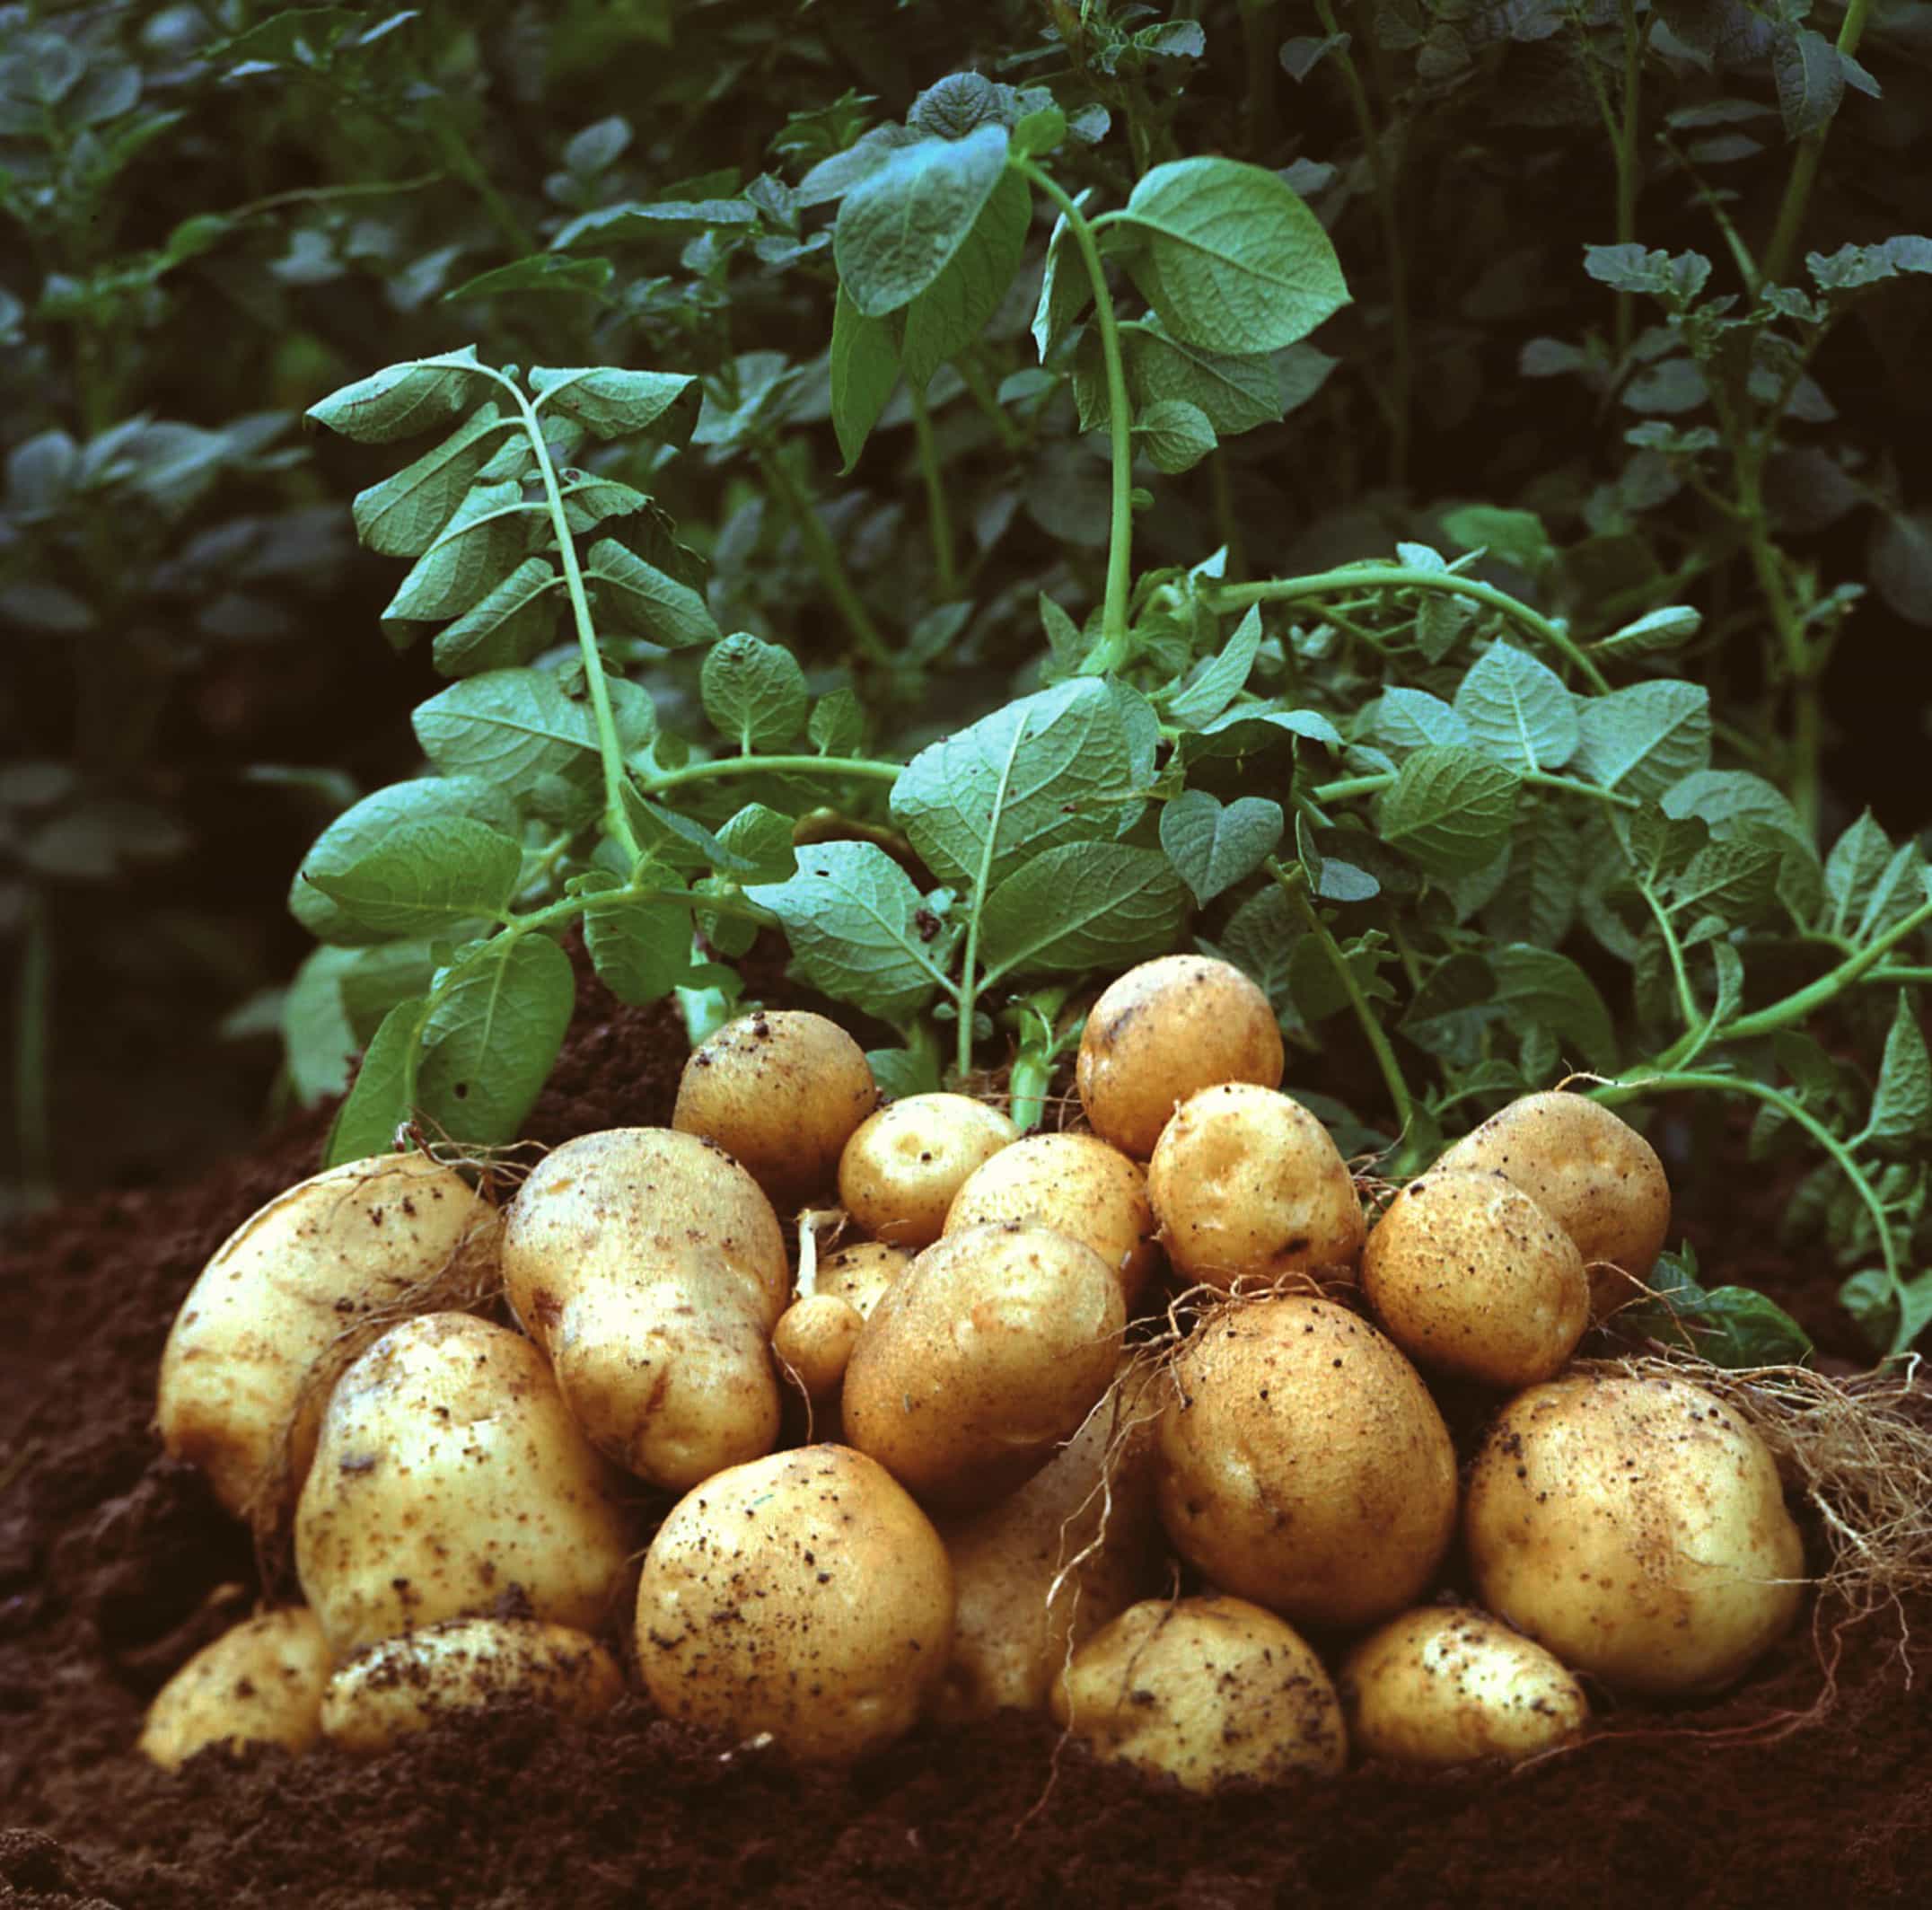 Types of potatoes